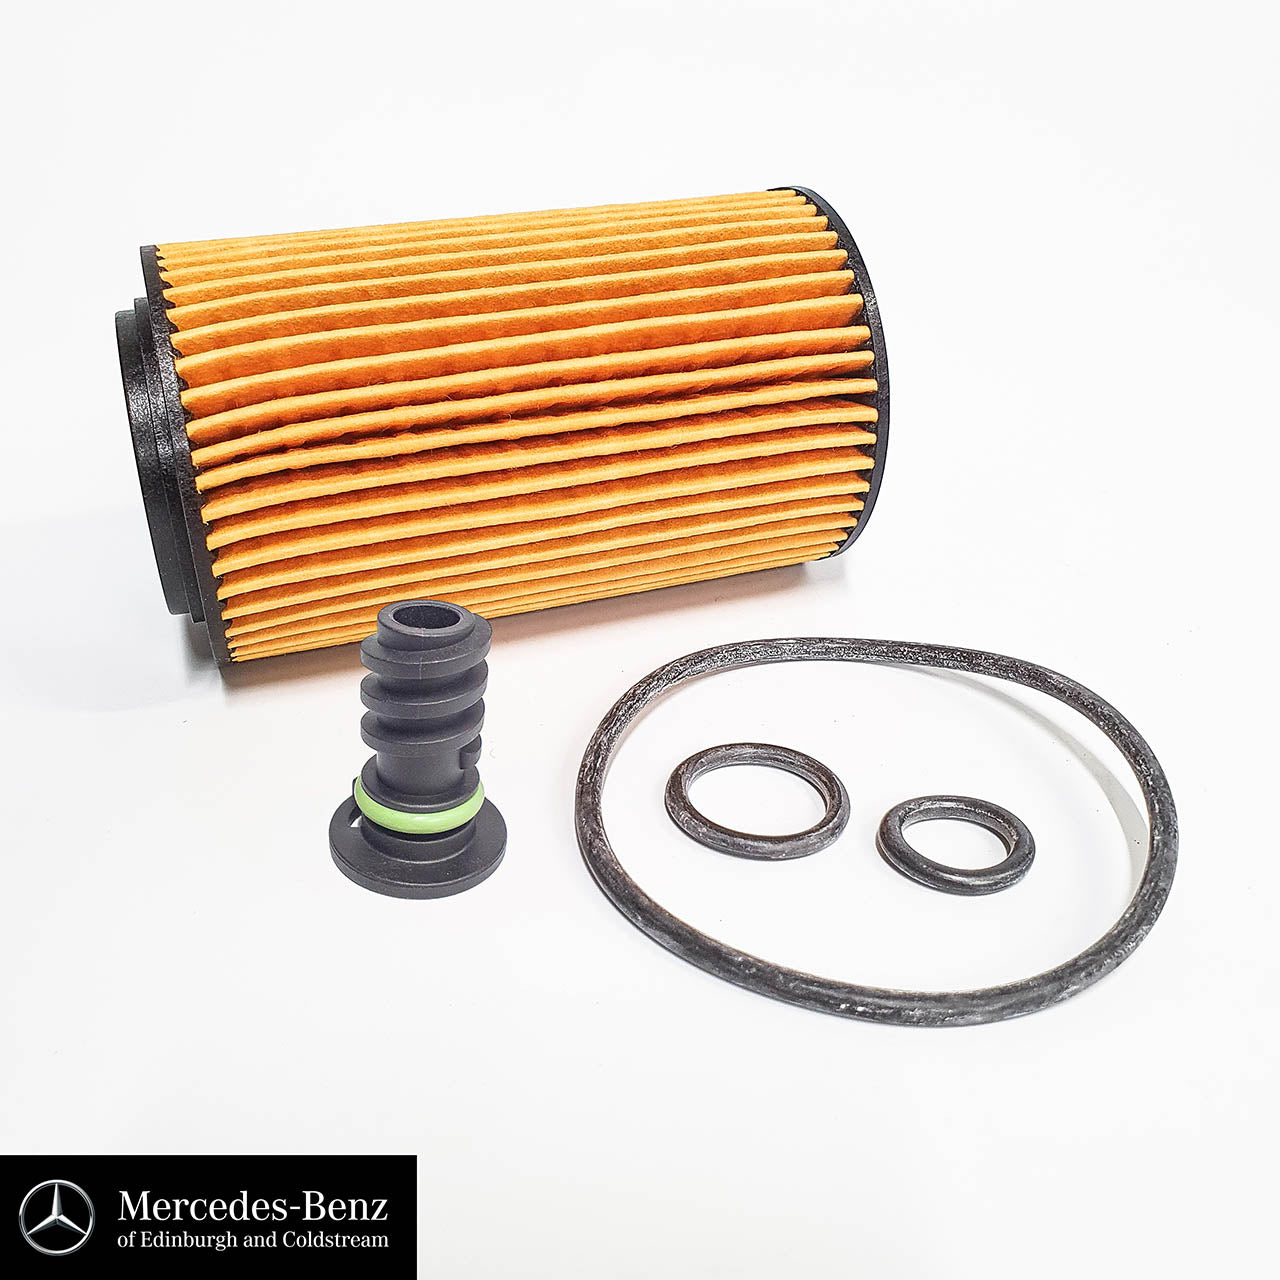 Genuine Mercedes-Benz service kit with sump plug for OM651 Diesel Engine